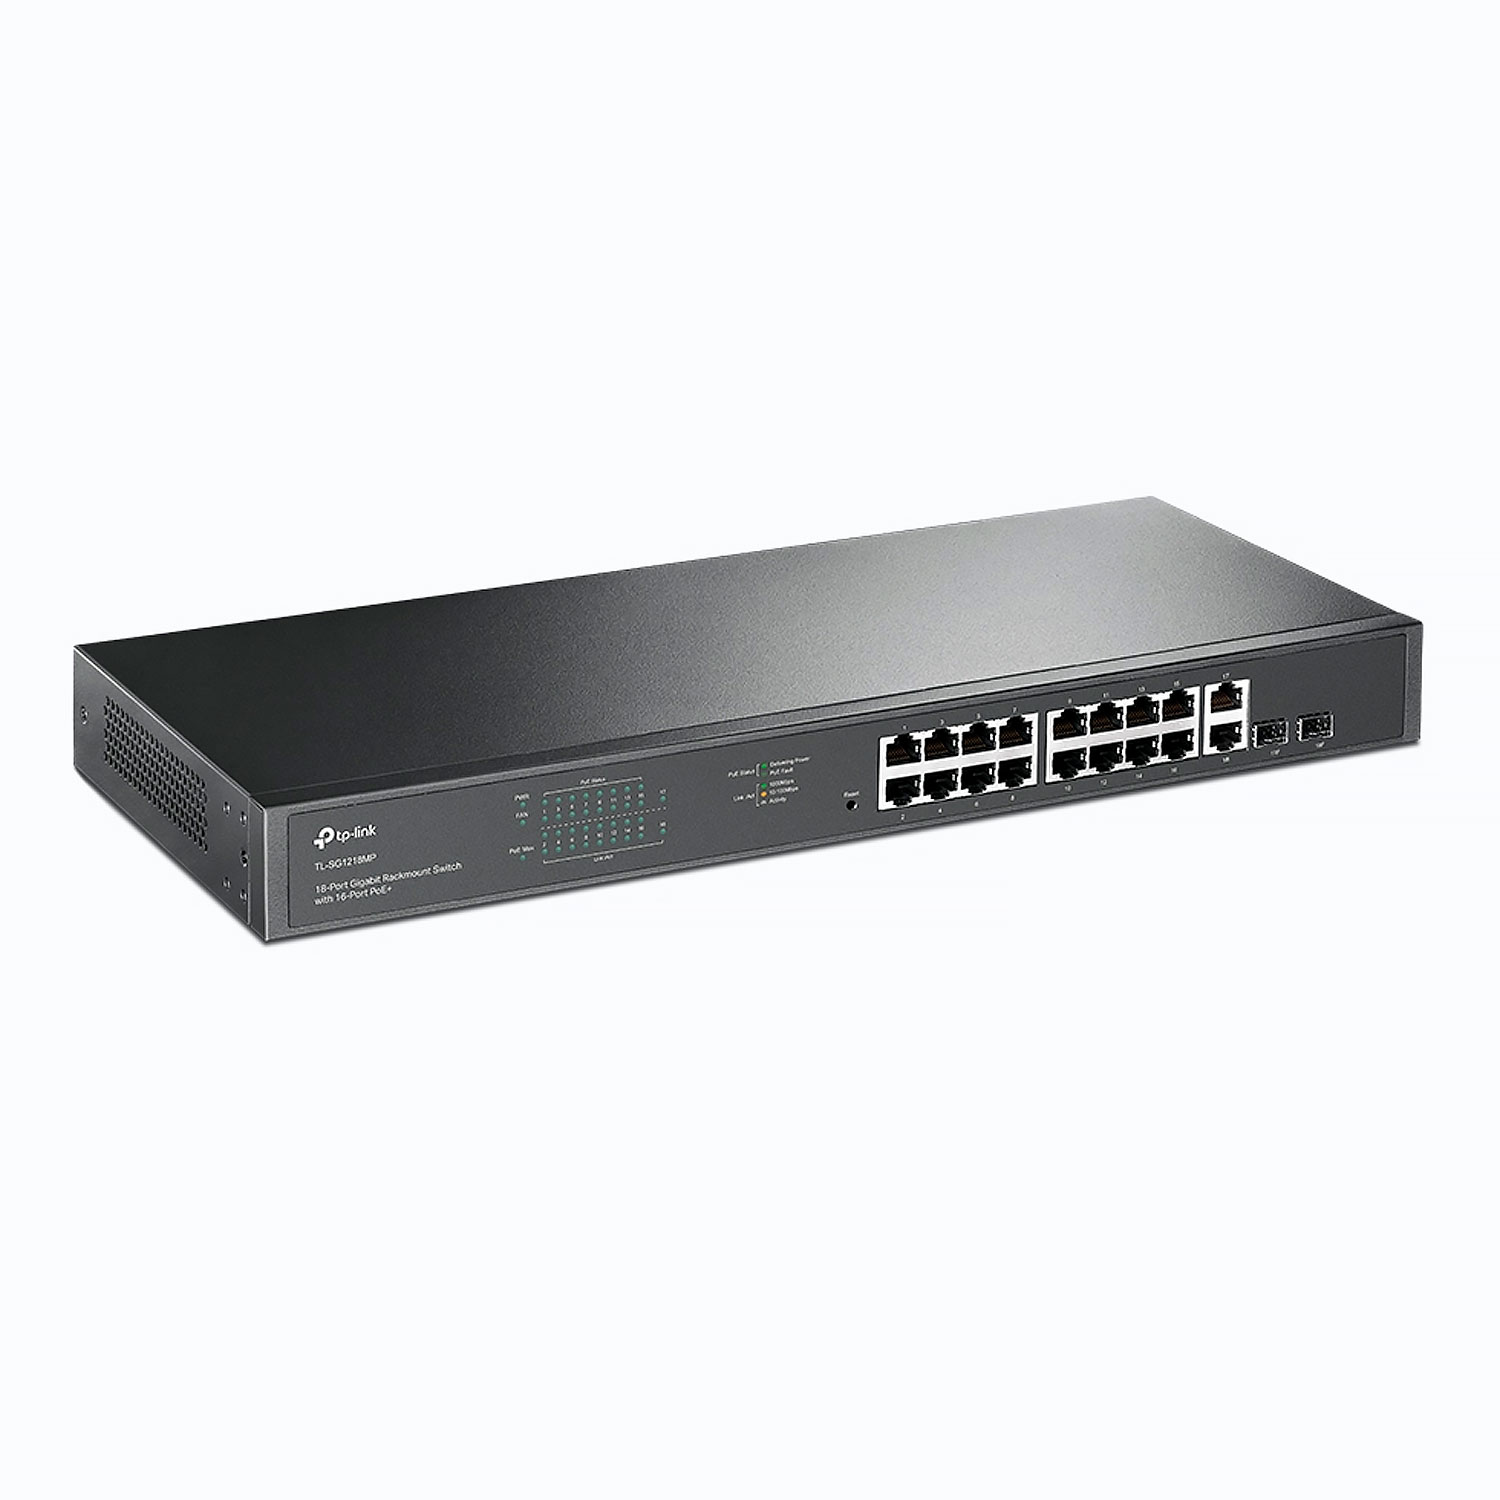 Hub Switch TP-Link 18 Portas TL-SG1218MP 10/100/1000 16POE + Rackmount 2SFP